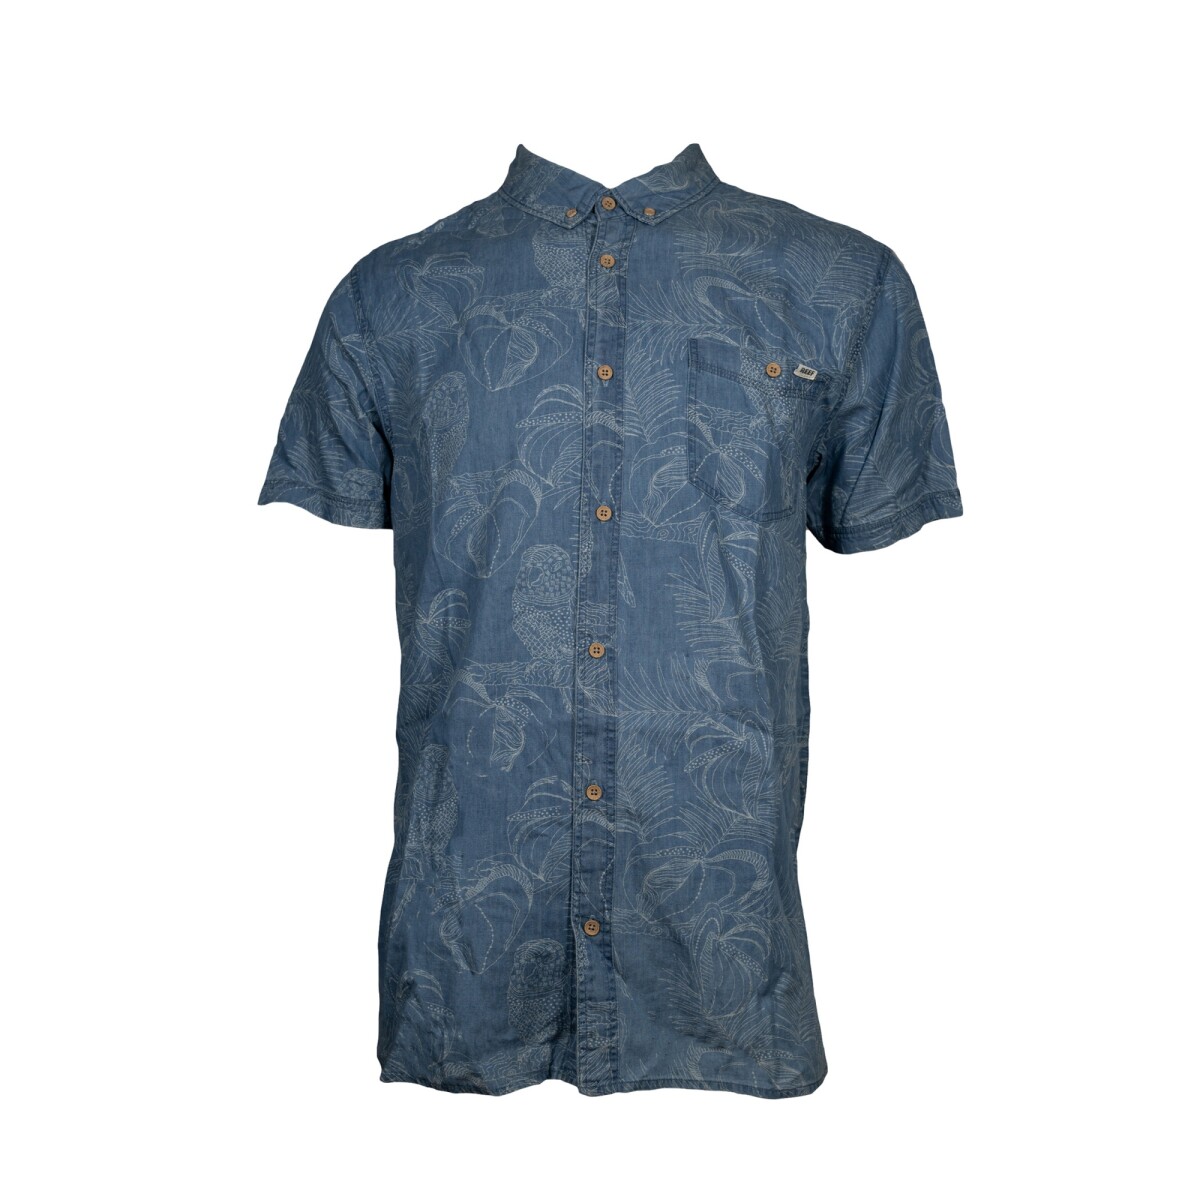 Camisa Reef de Hombre - MCAV1943AZUL - AZUL 